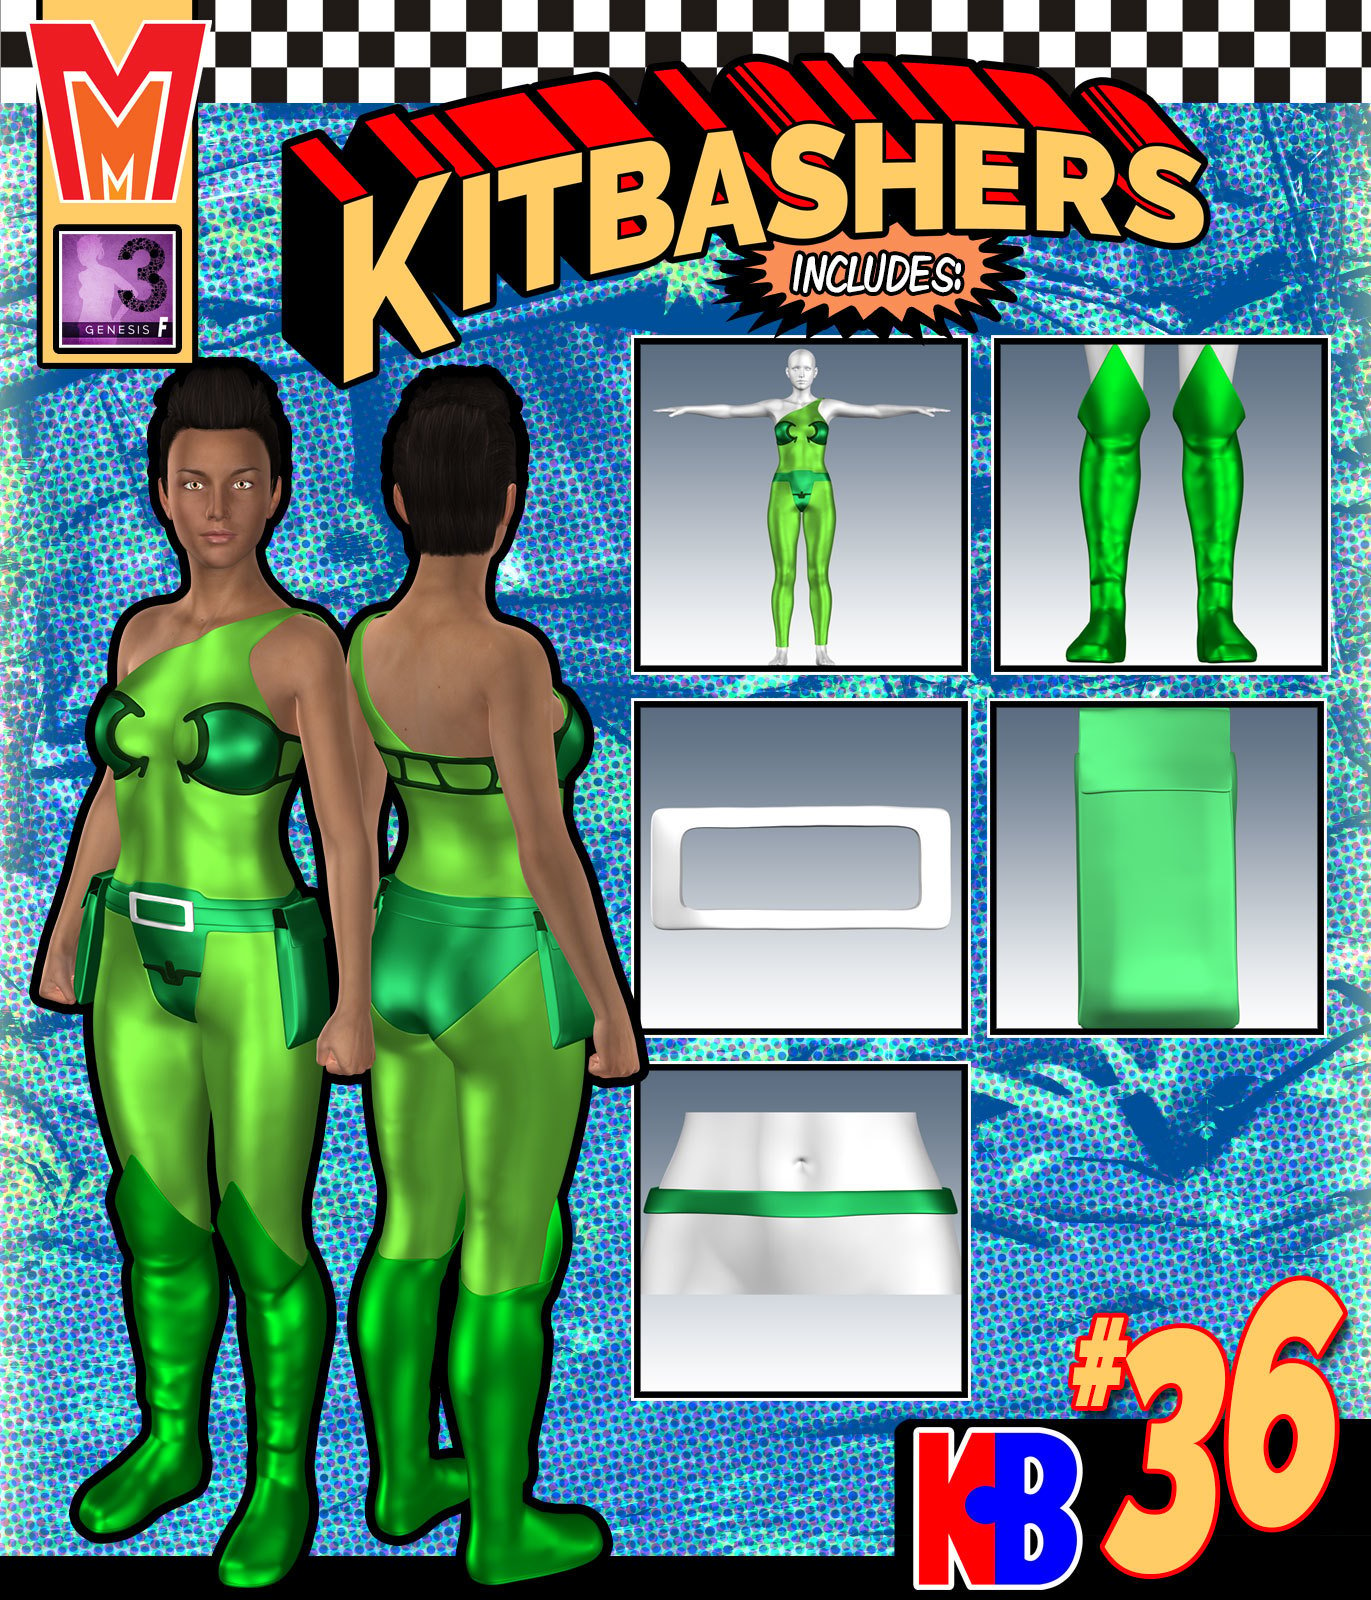 Kitbashers 036 MMG3F by: MightyMite, 3D Models by Daz 3D